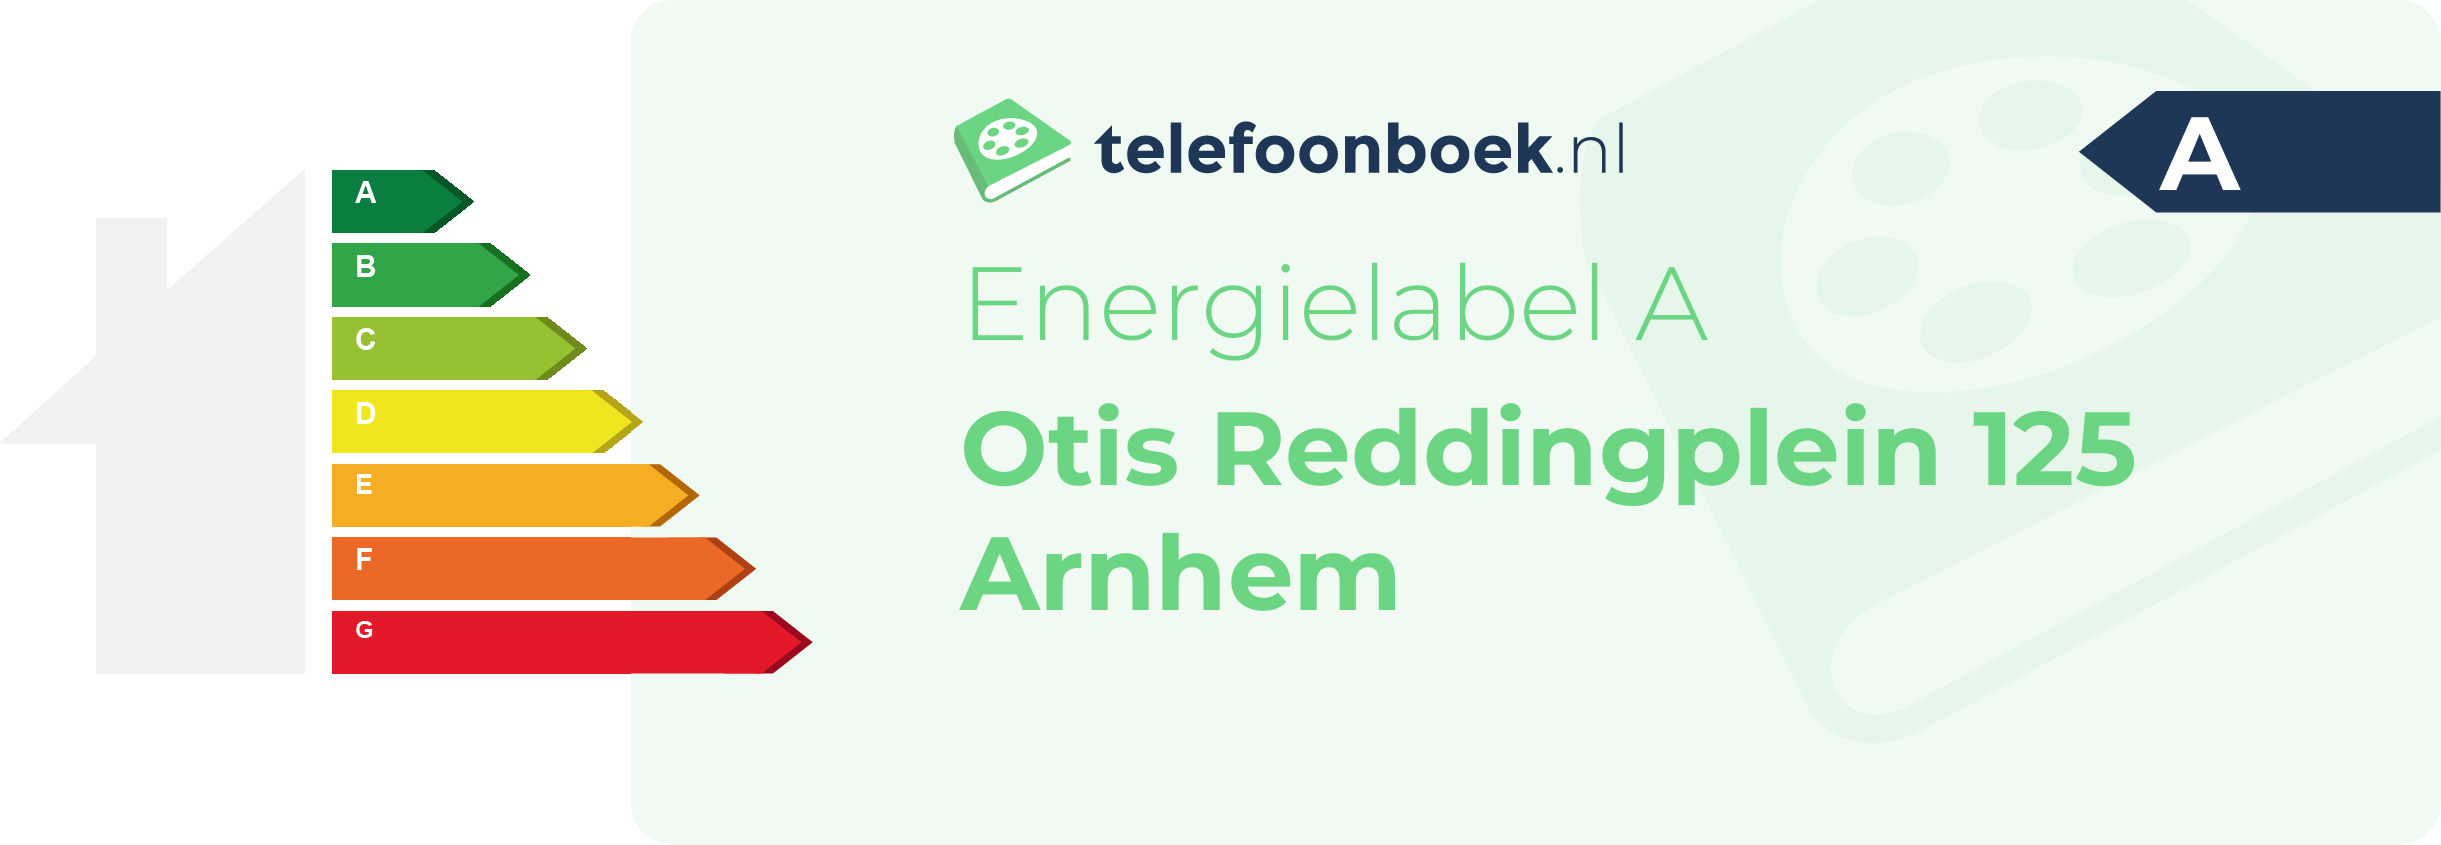 Energielabel Otis Reddingplein 125 Arnhem